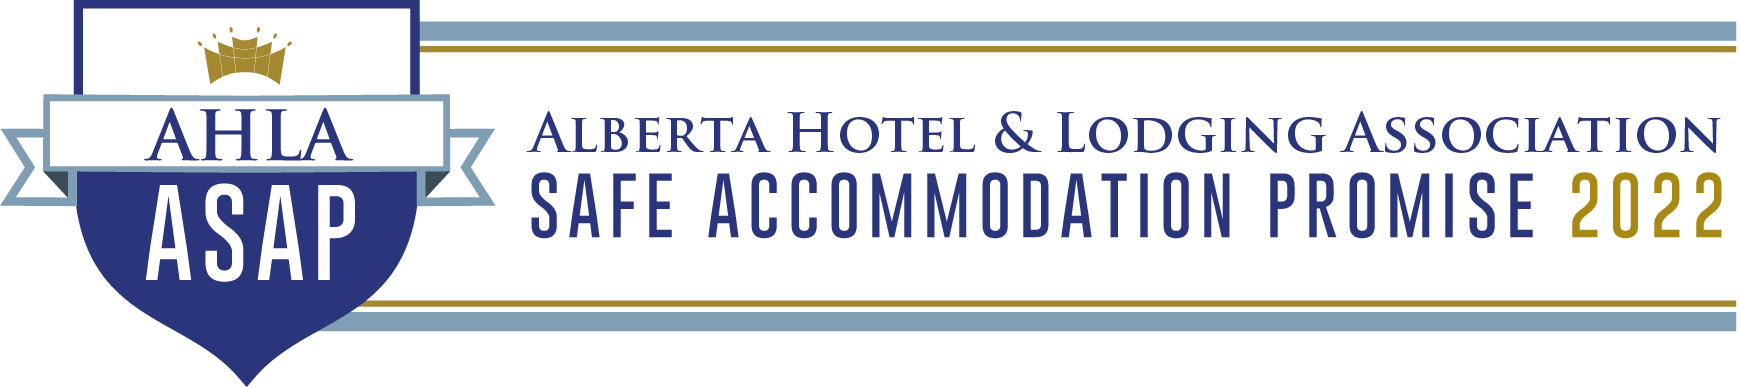 Alberta Hotel & Lodging Association Safe Accommodation Promise 2022